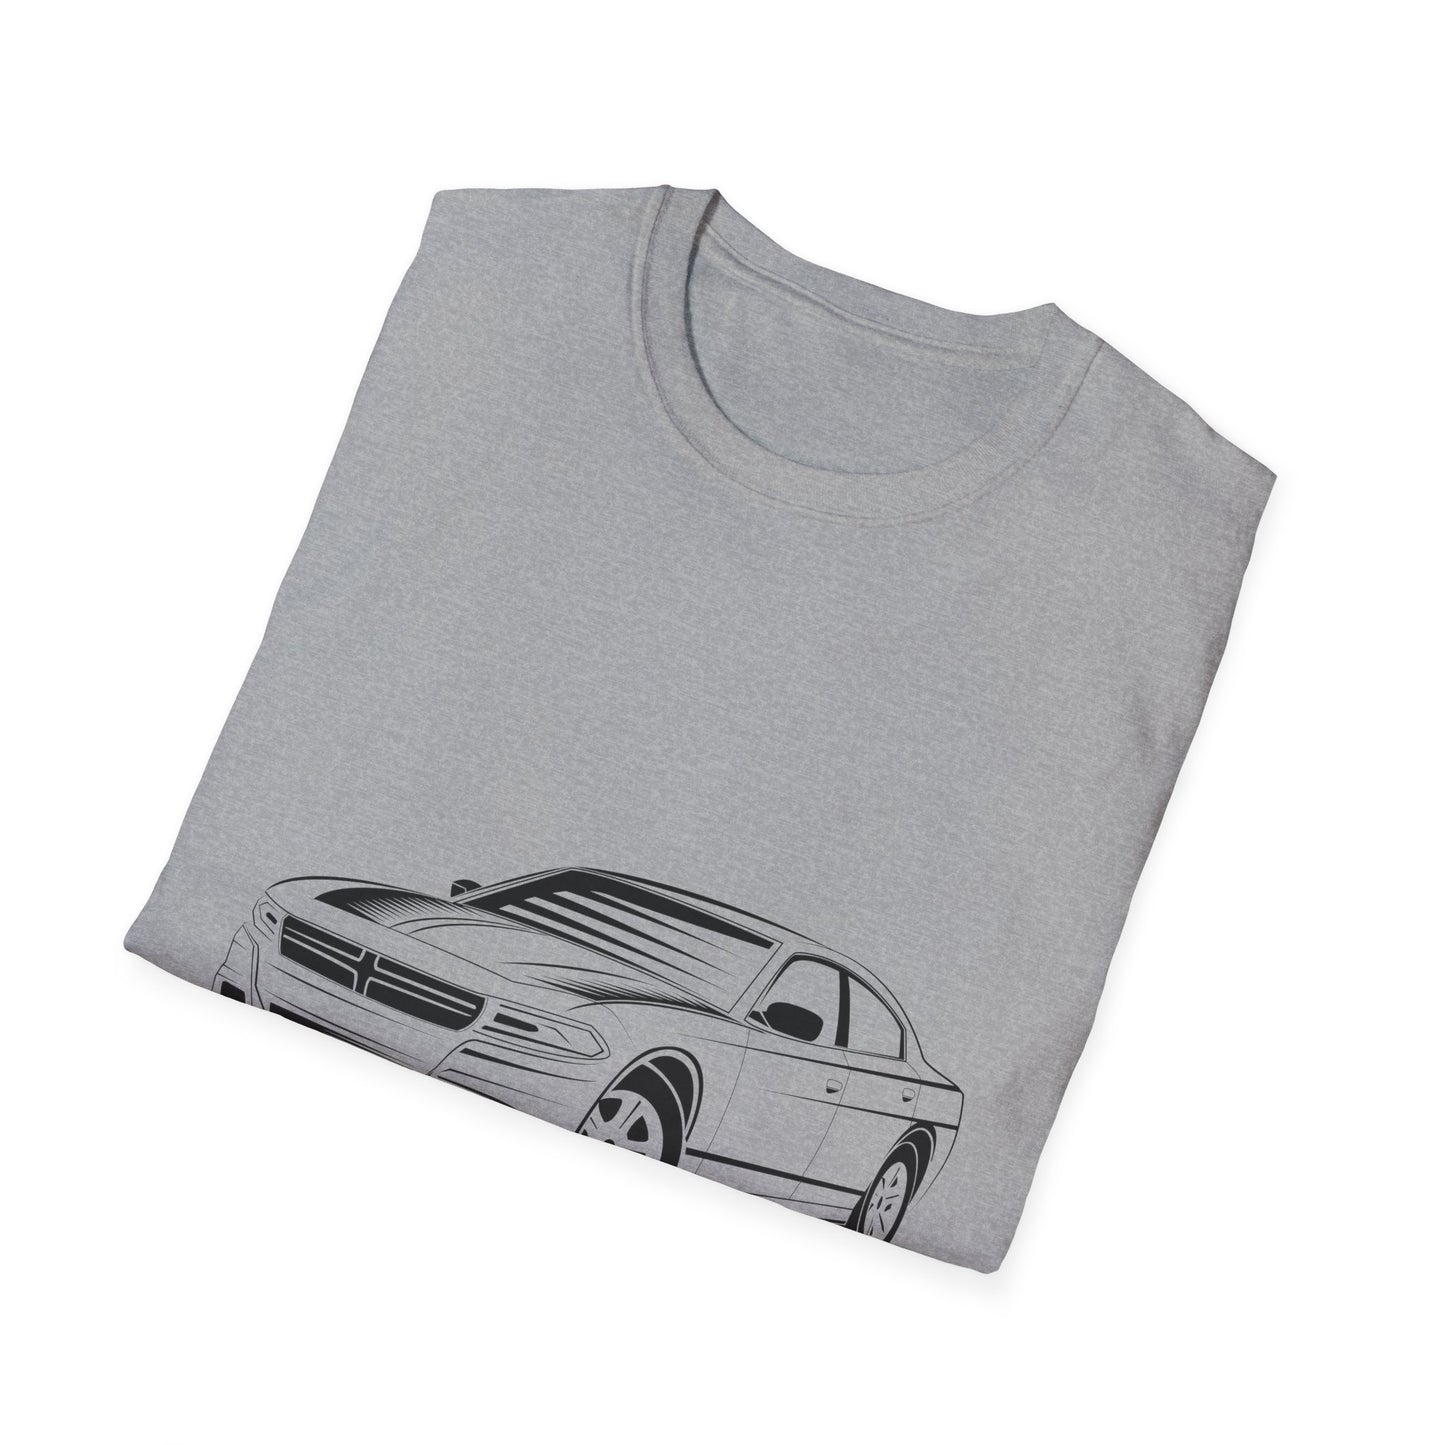 Charger Race Car T-Shirt